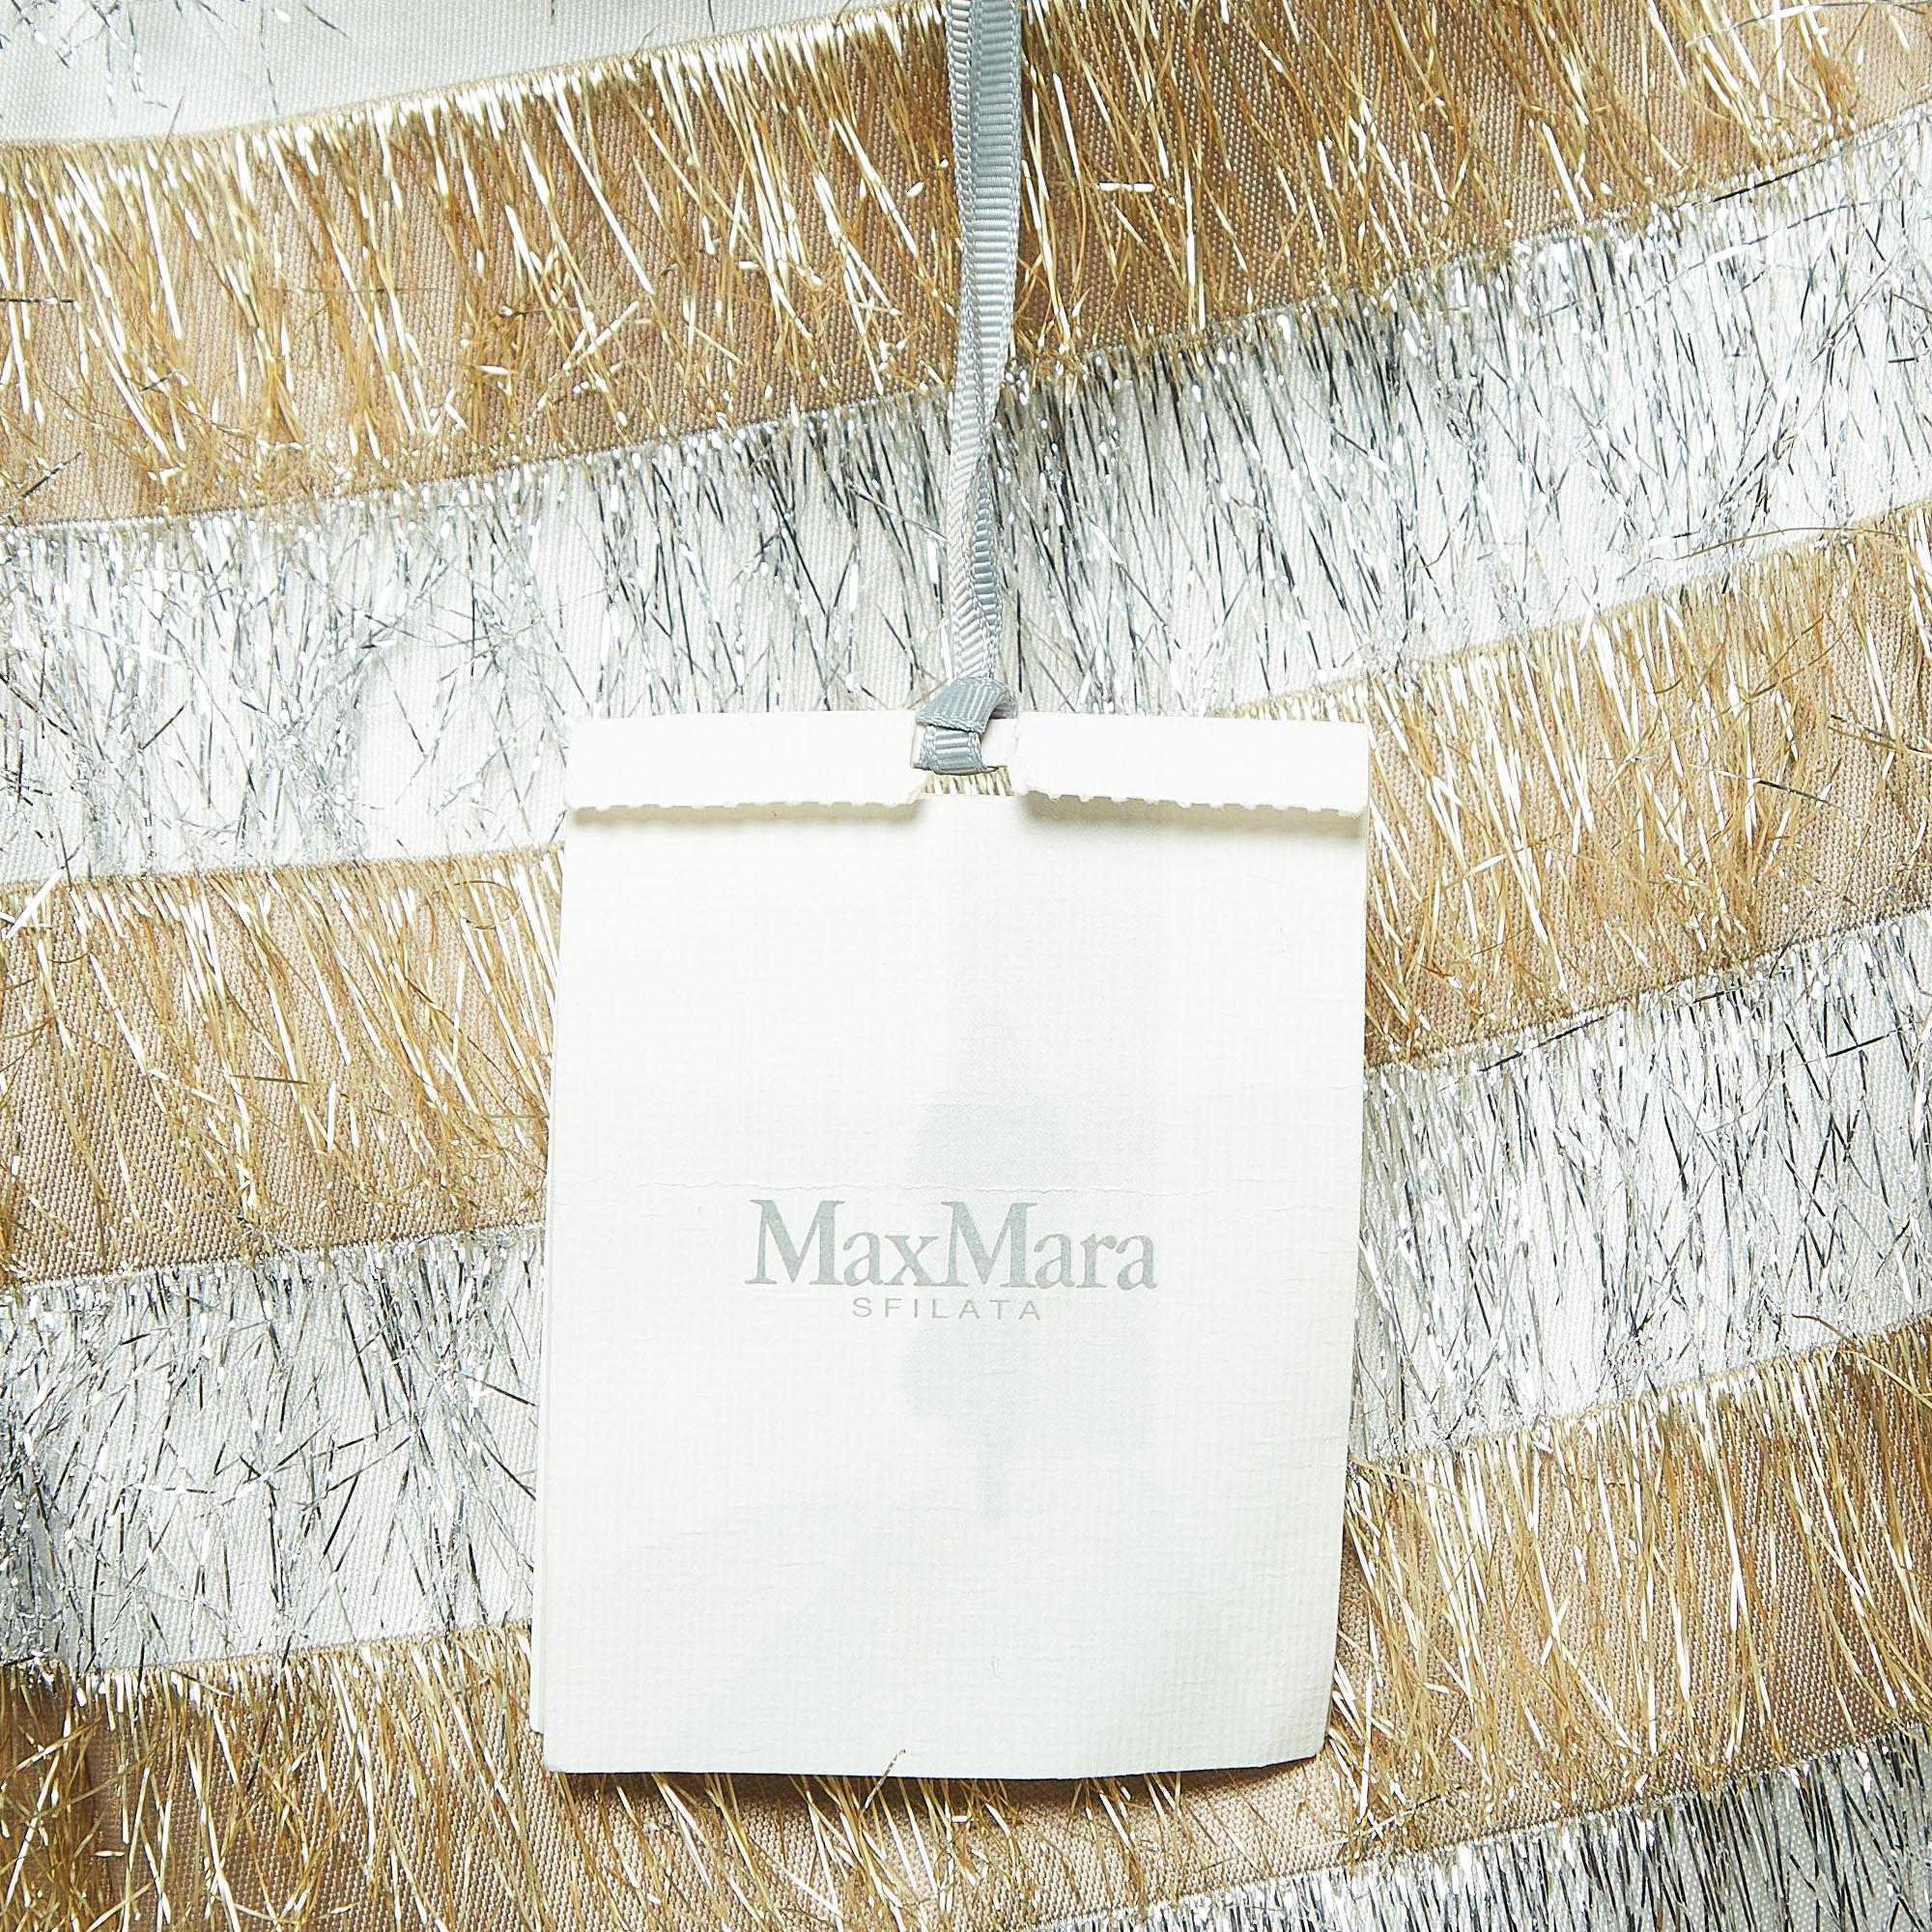 Max Mara Gold/Silver Metallic Fringed Crepe Gavetta Skirt S In Excellent Condition For Sale In Dubai, Al Qouz 2